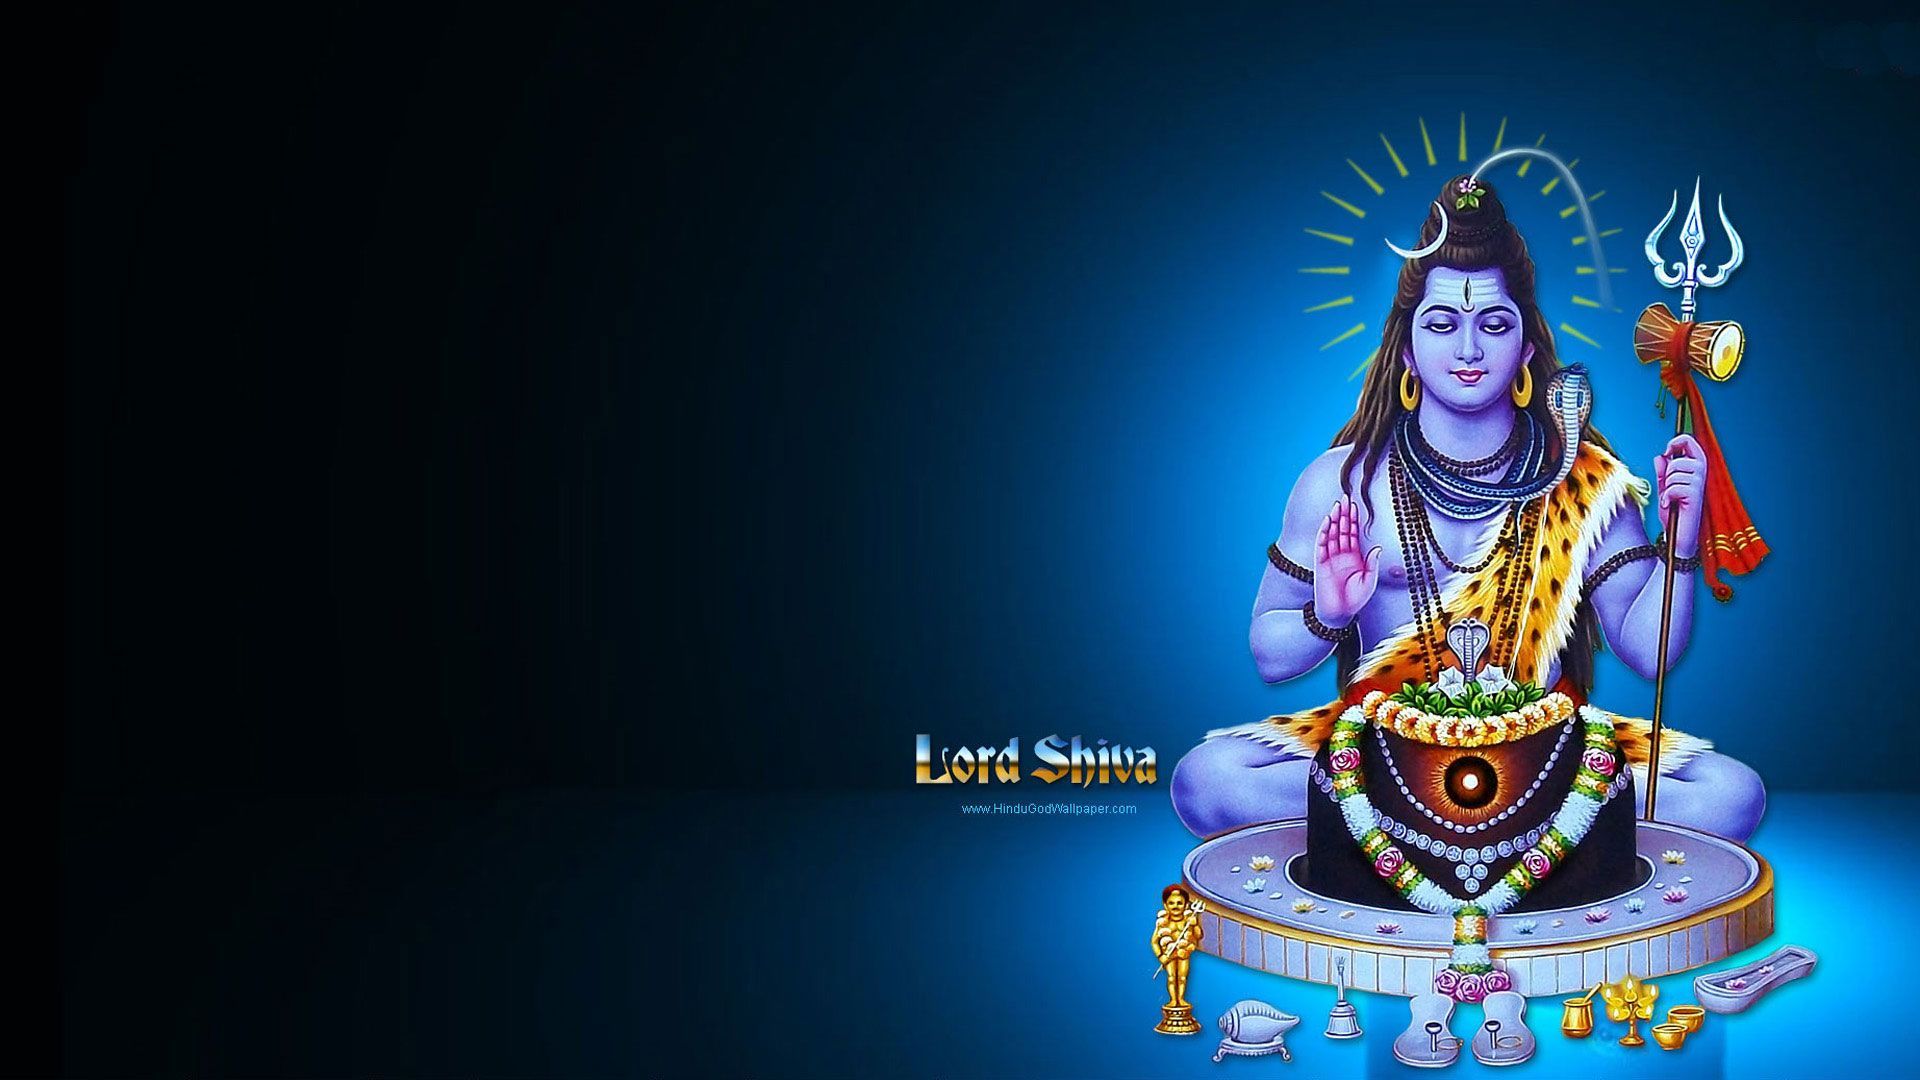 hd pics photo gods lord shiva mahadev new attractive desktop background wallpaper. Shiva wallpaper, Lord shiva HD image, Shiva image hd